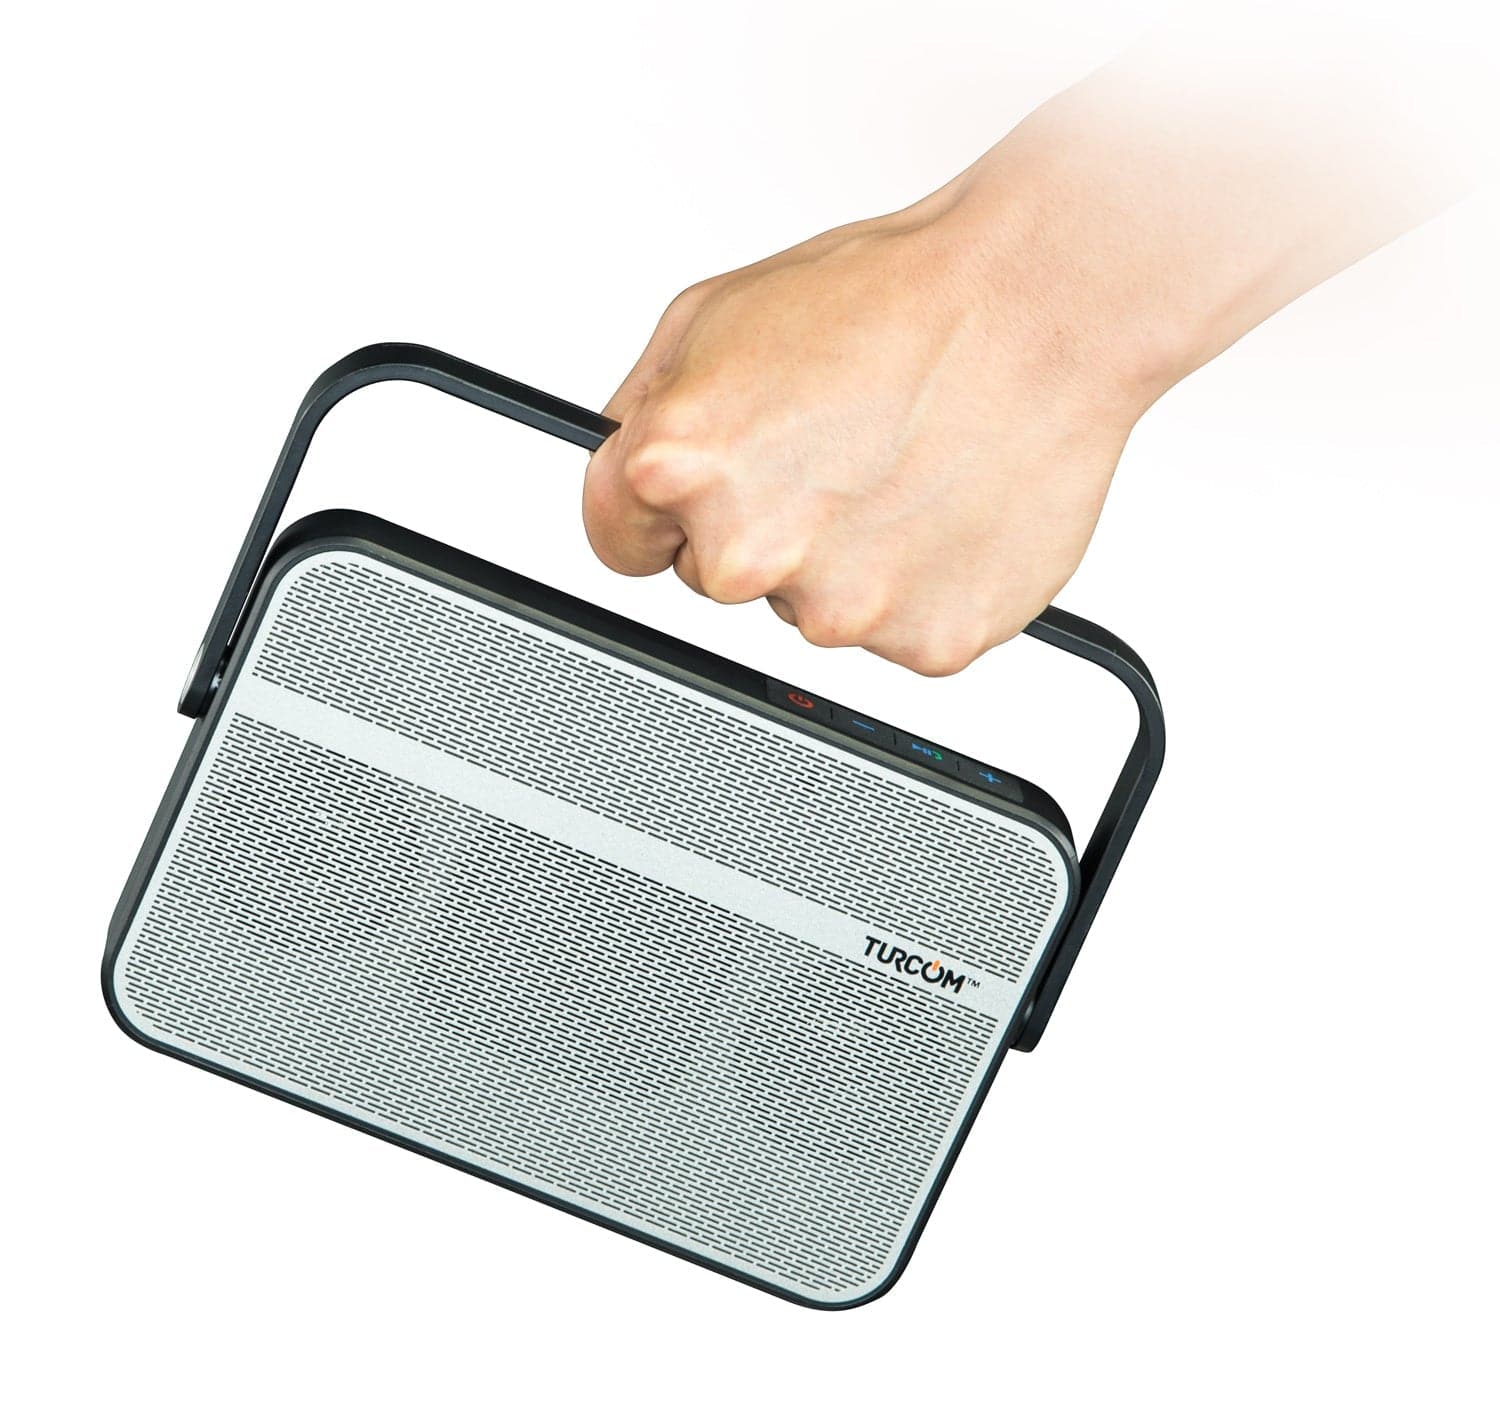 Turcom AcoustoShock Move Portable Bluetooth Speaker - Mount-It!